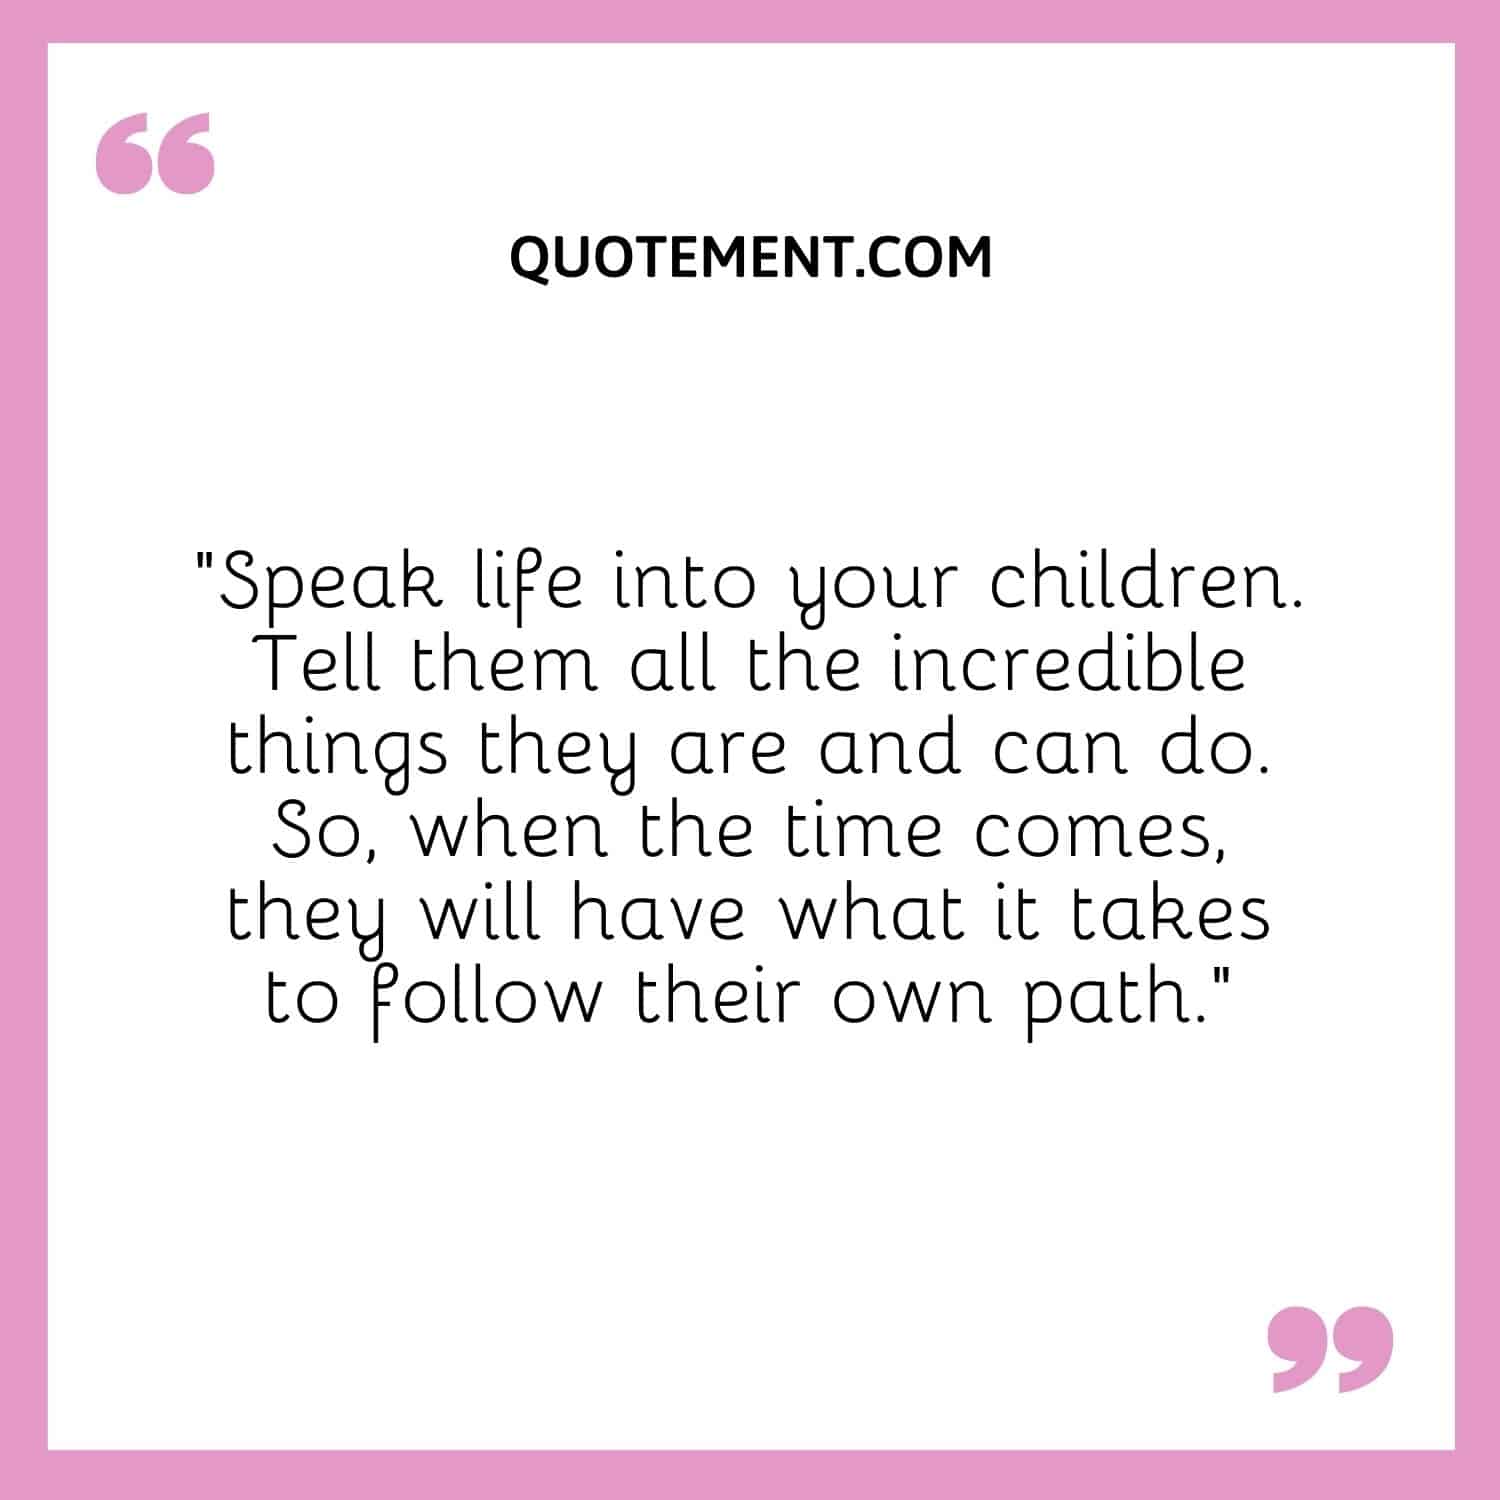 Speak life into your children